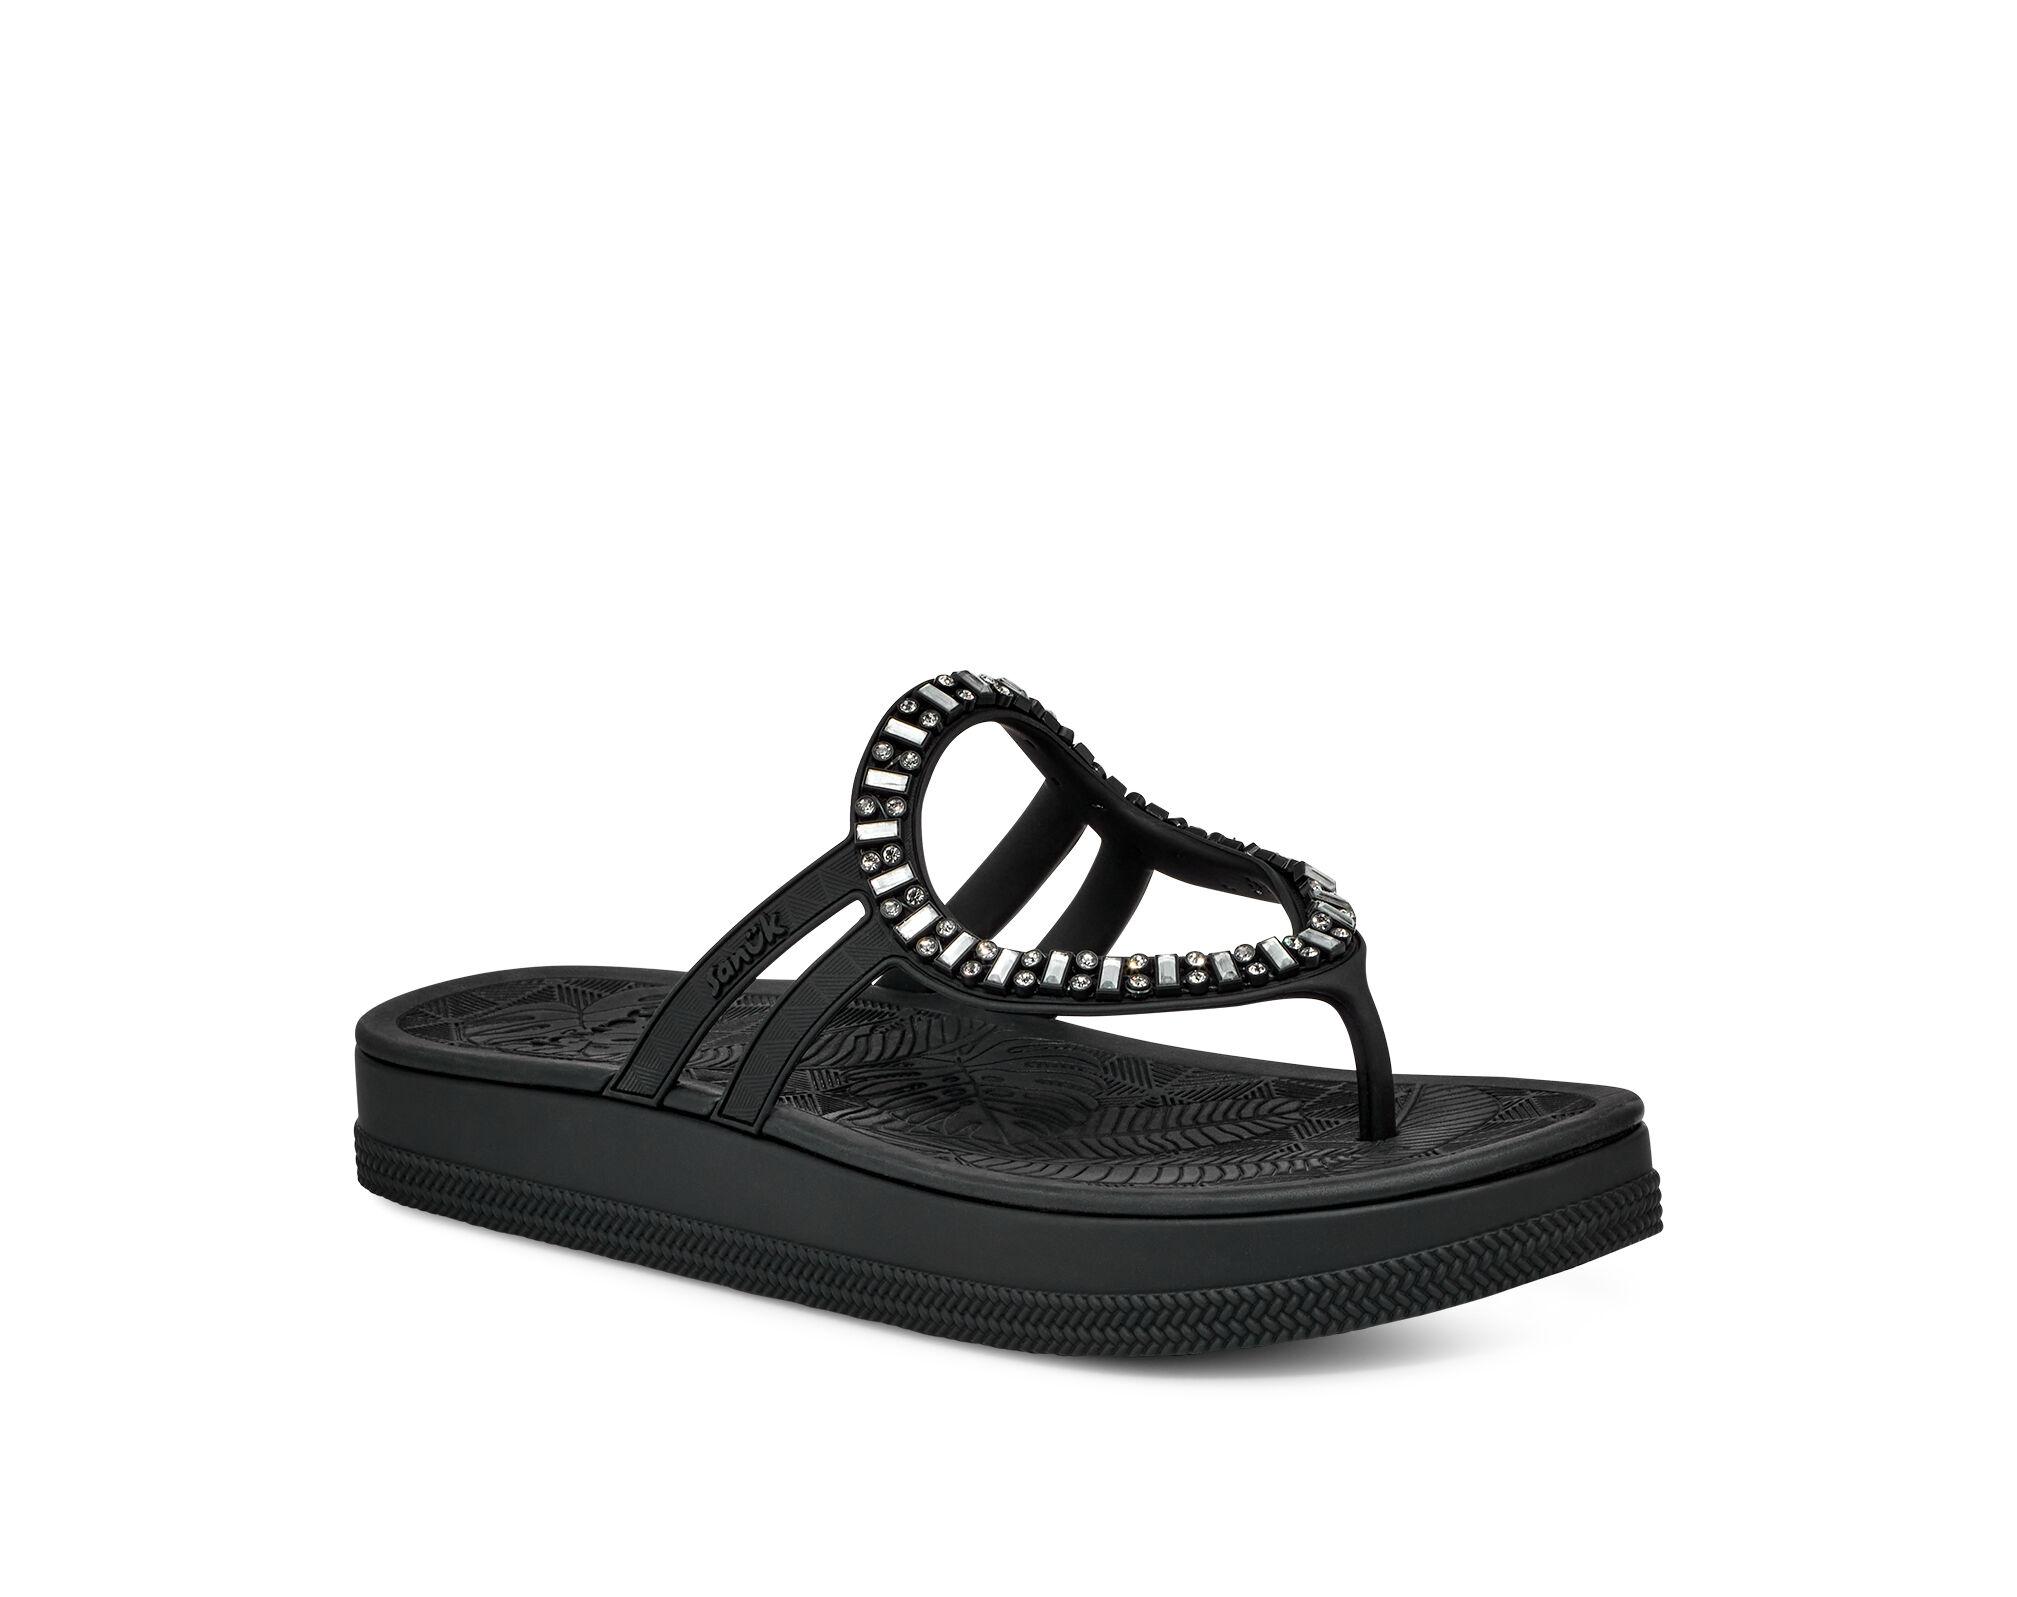 Clarks Women's Tri Clover Sandal - Black | Discount Clarks Ladies Sandals &  More - Shoolu.com | Shoolu.com